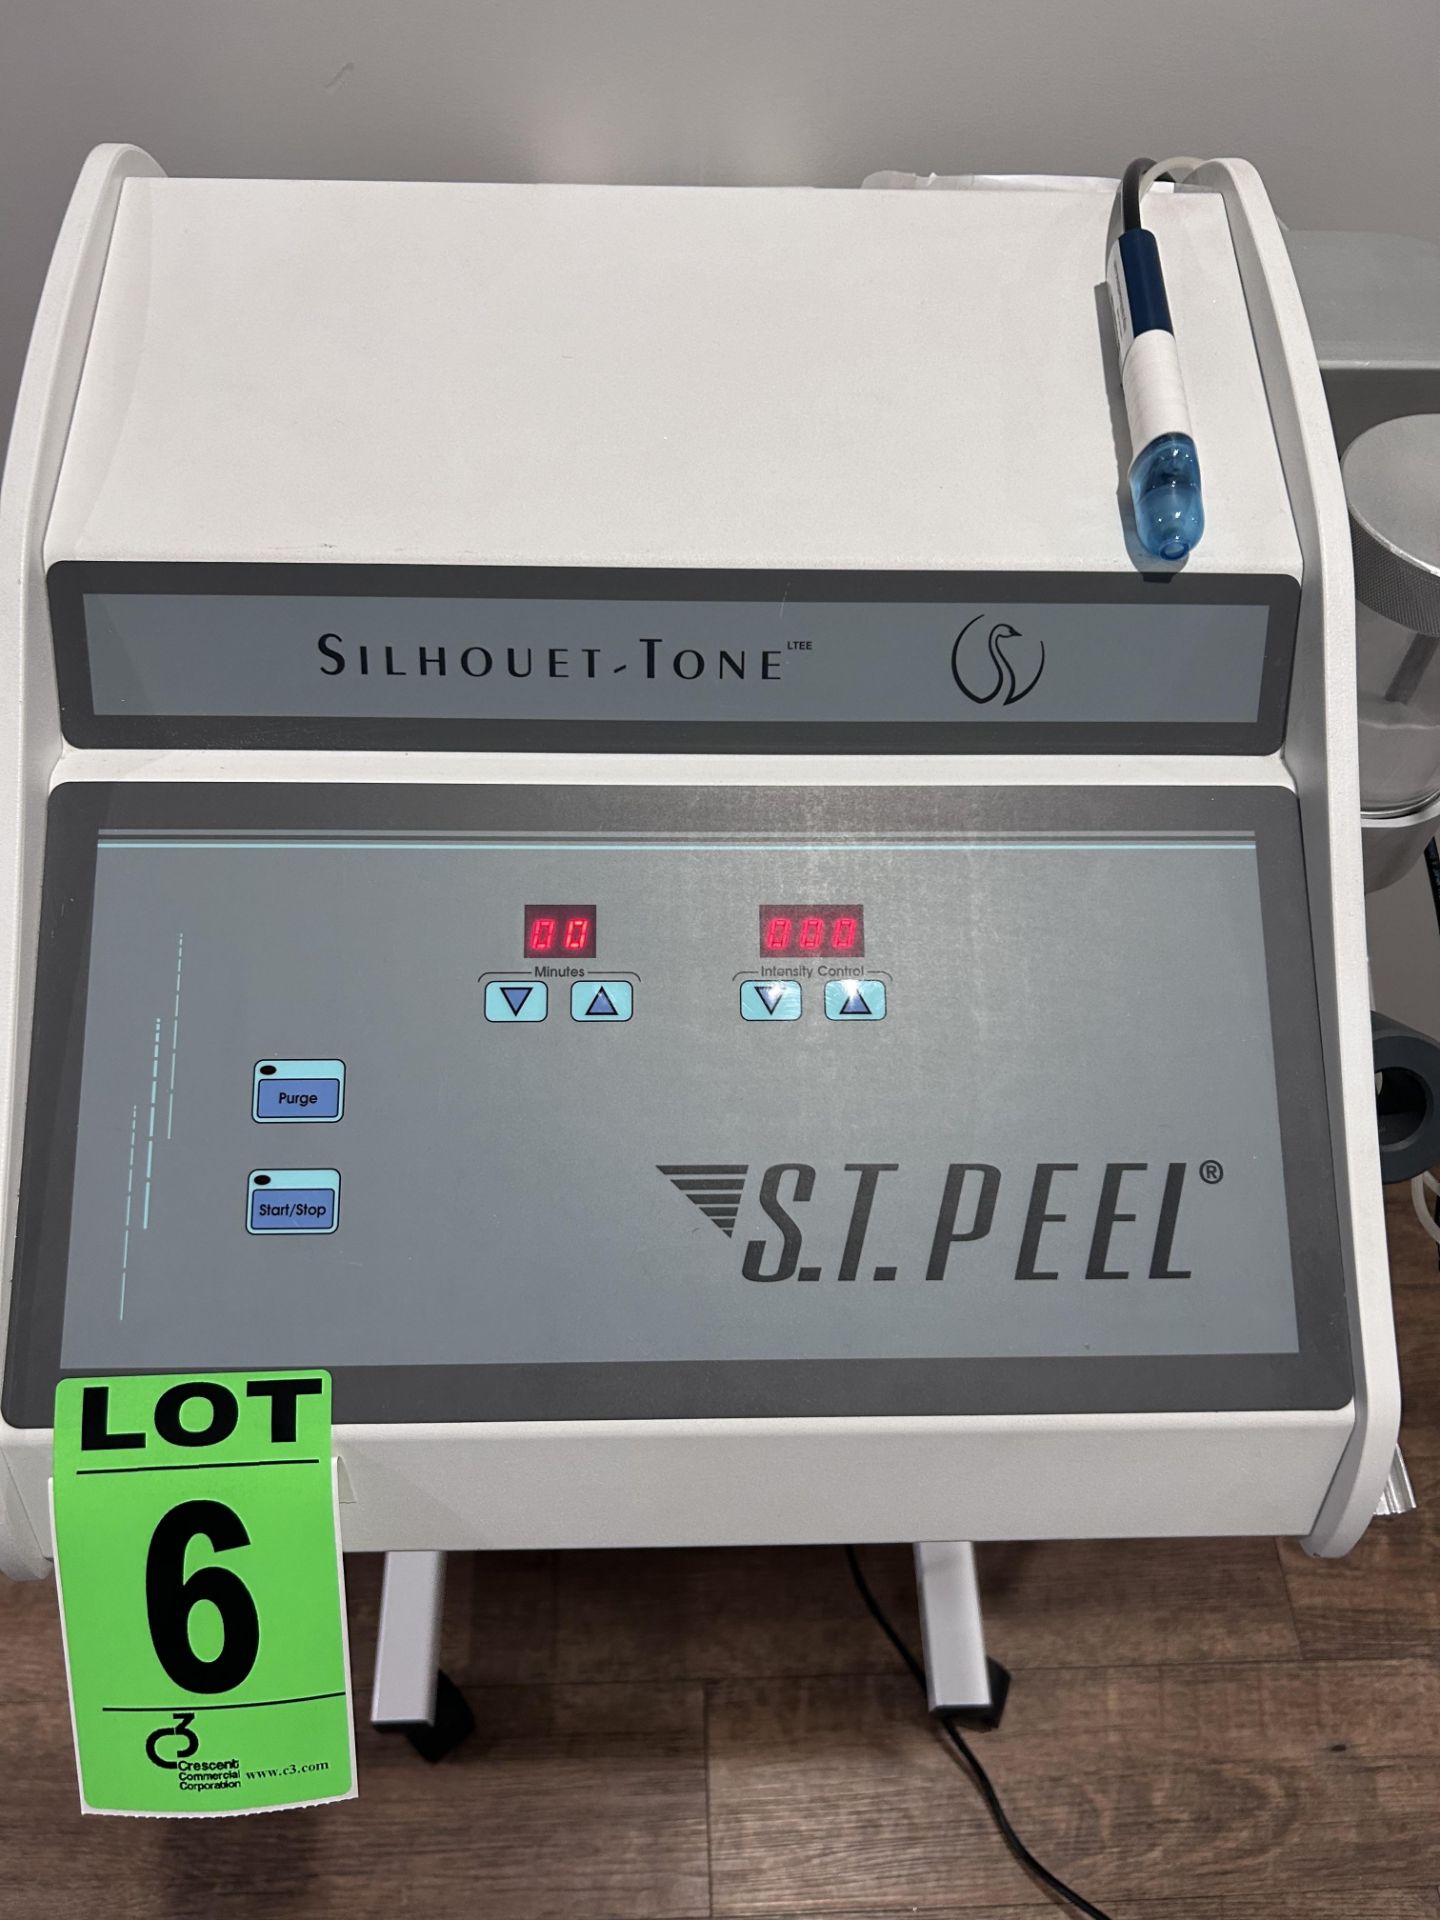 SILHOUET-TONE mod. ST-PEEL Microdermabrasion Professional Beauty Machine - Image 2 of 3